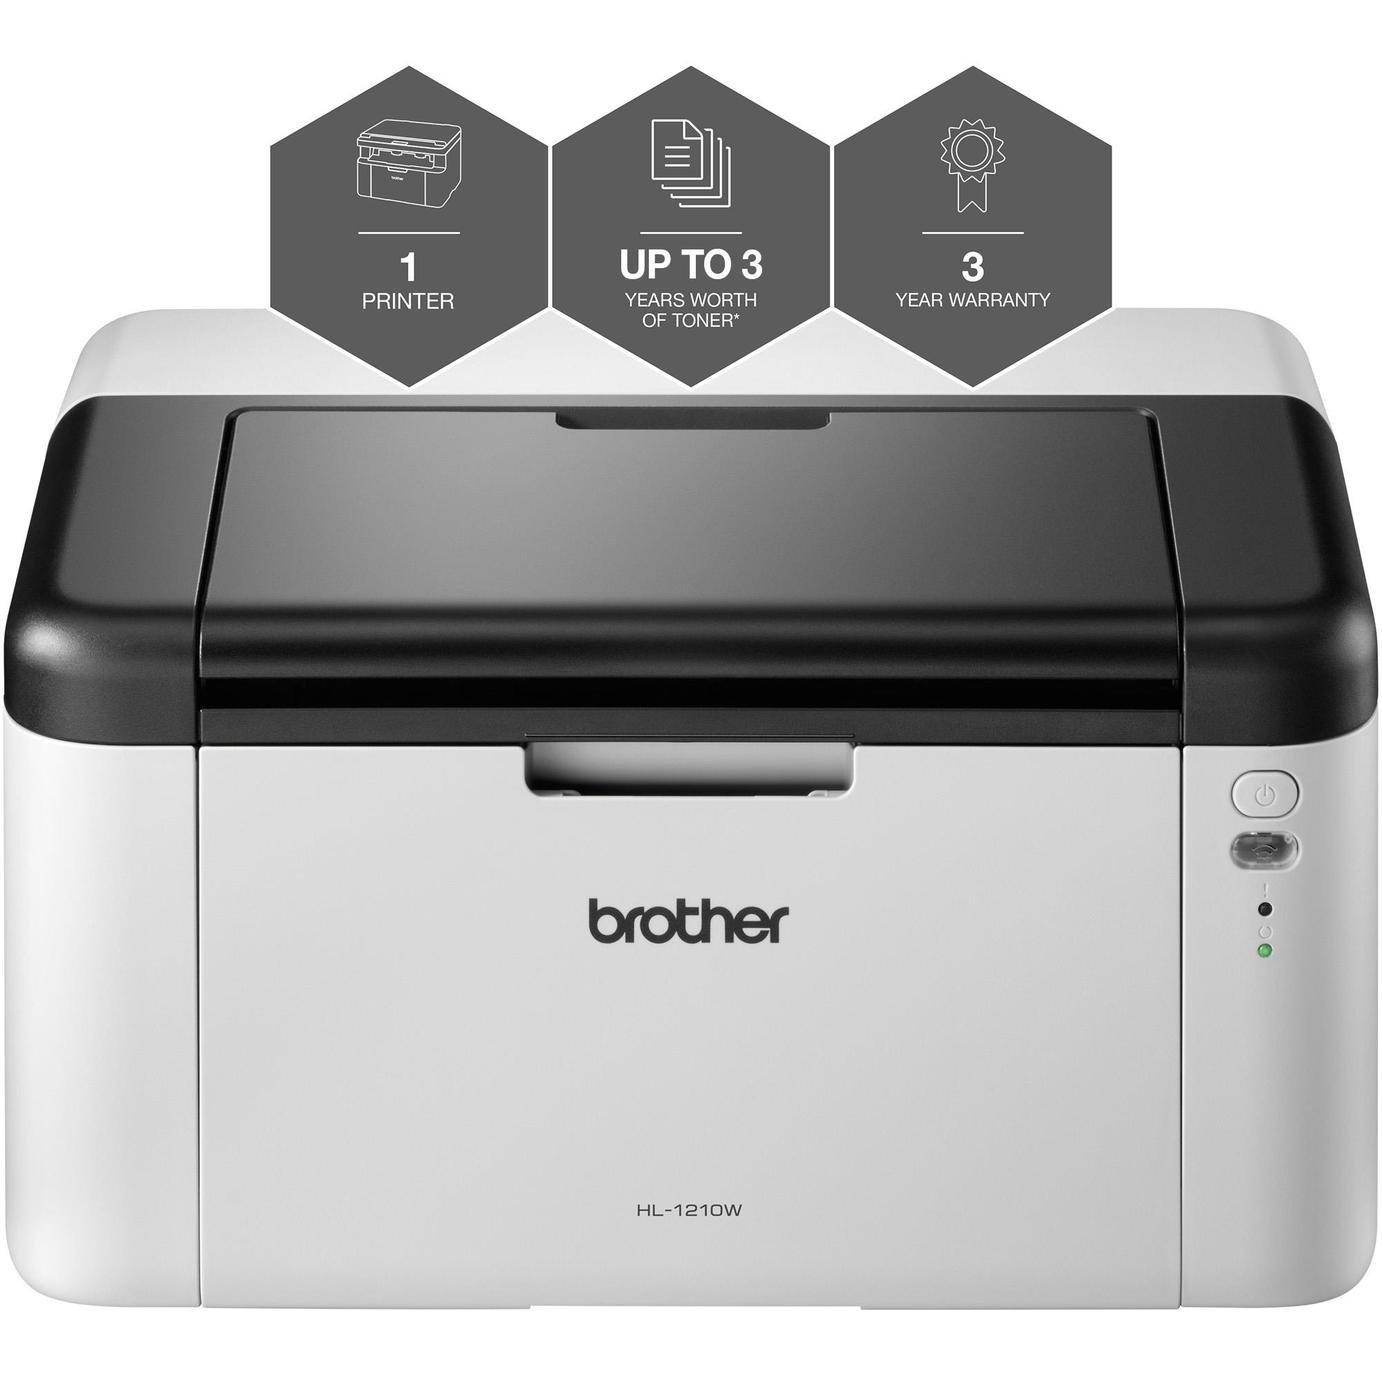 Brother HL1210W Wireless Mono Laser Printer Bundle Review